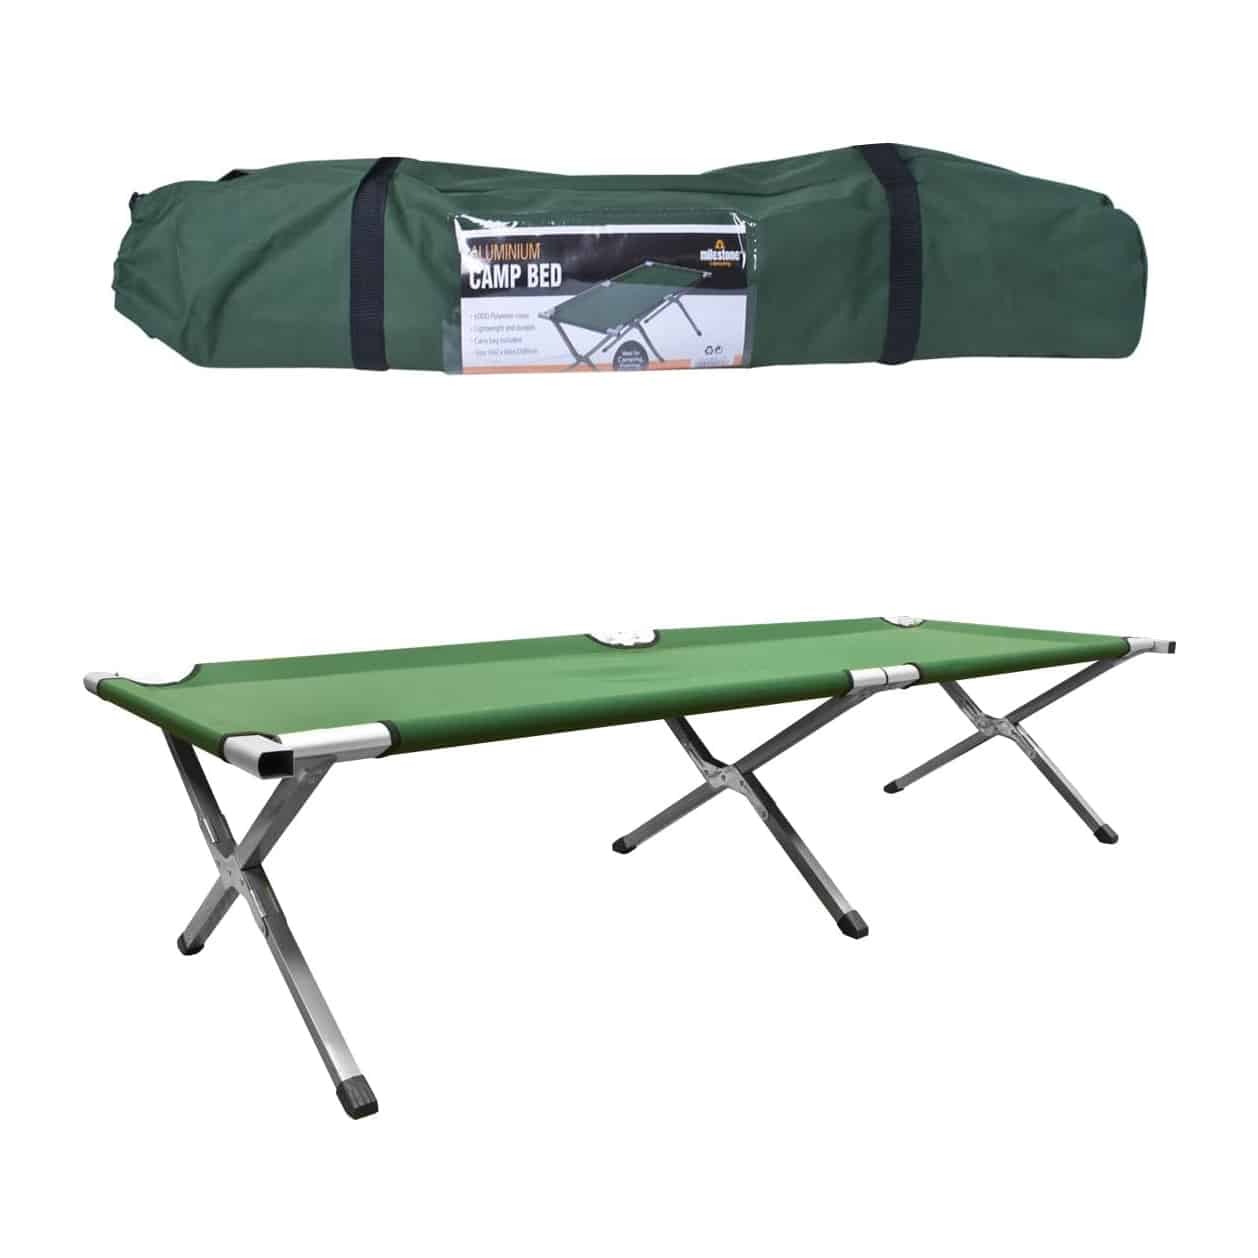 4. Milestone Folding Camping Bed 